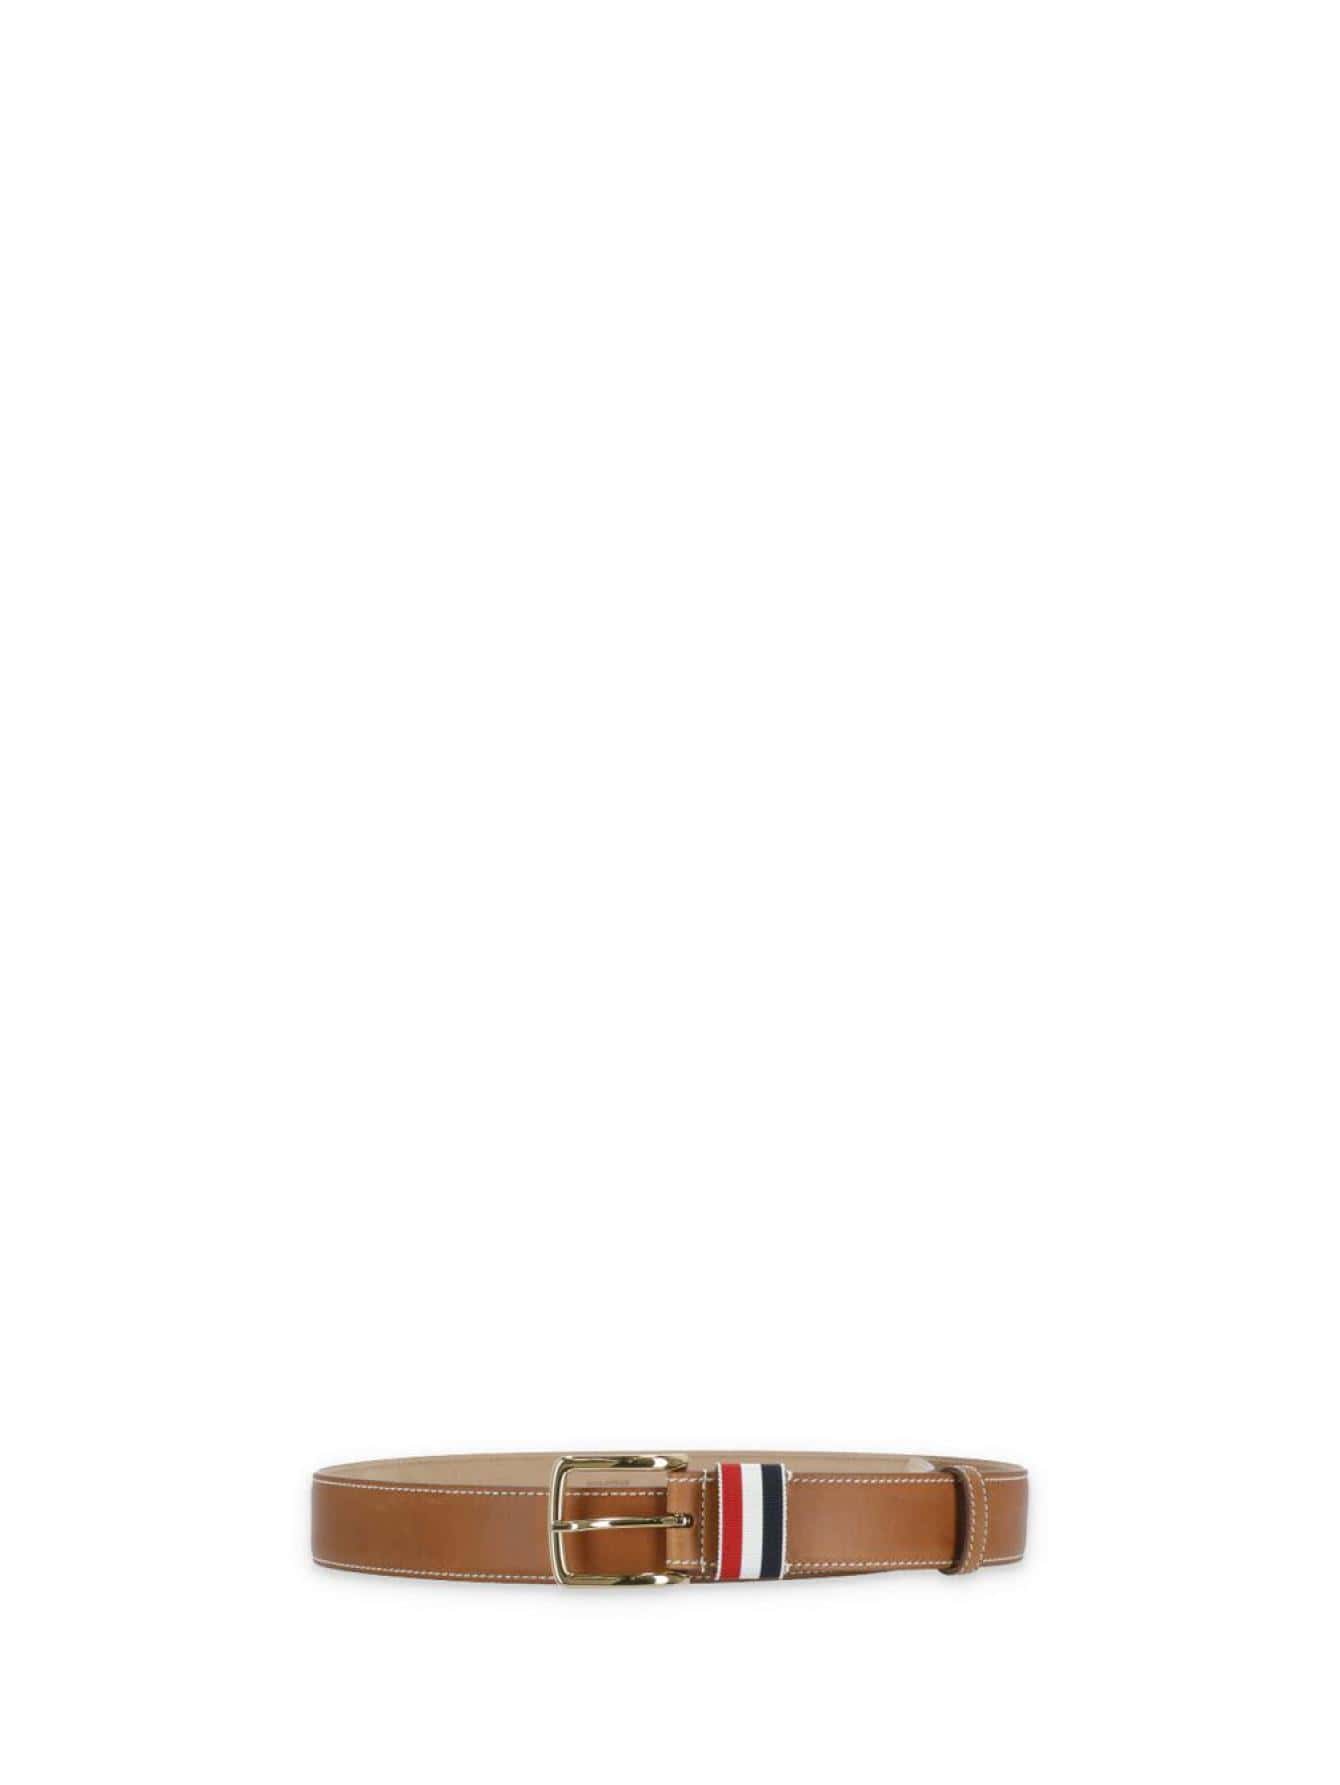 Ремень мужской Thom Browne BROWN MCX039AL0044255, коричневый famous brand belt men top quality genuine luxury leather belts for men strap male metal black leather automatic buckle belts men